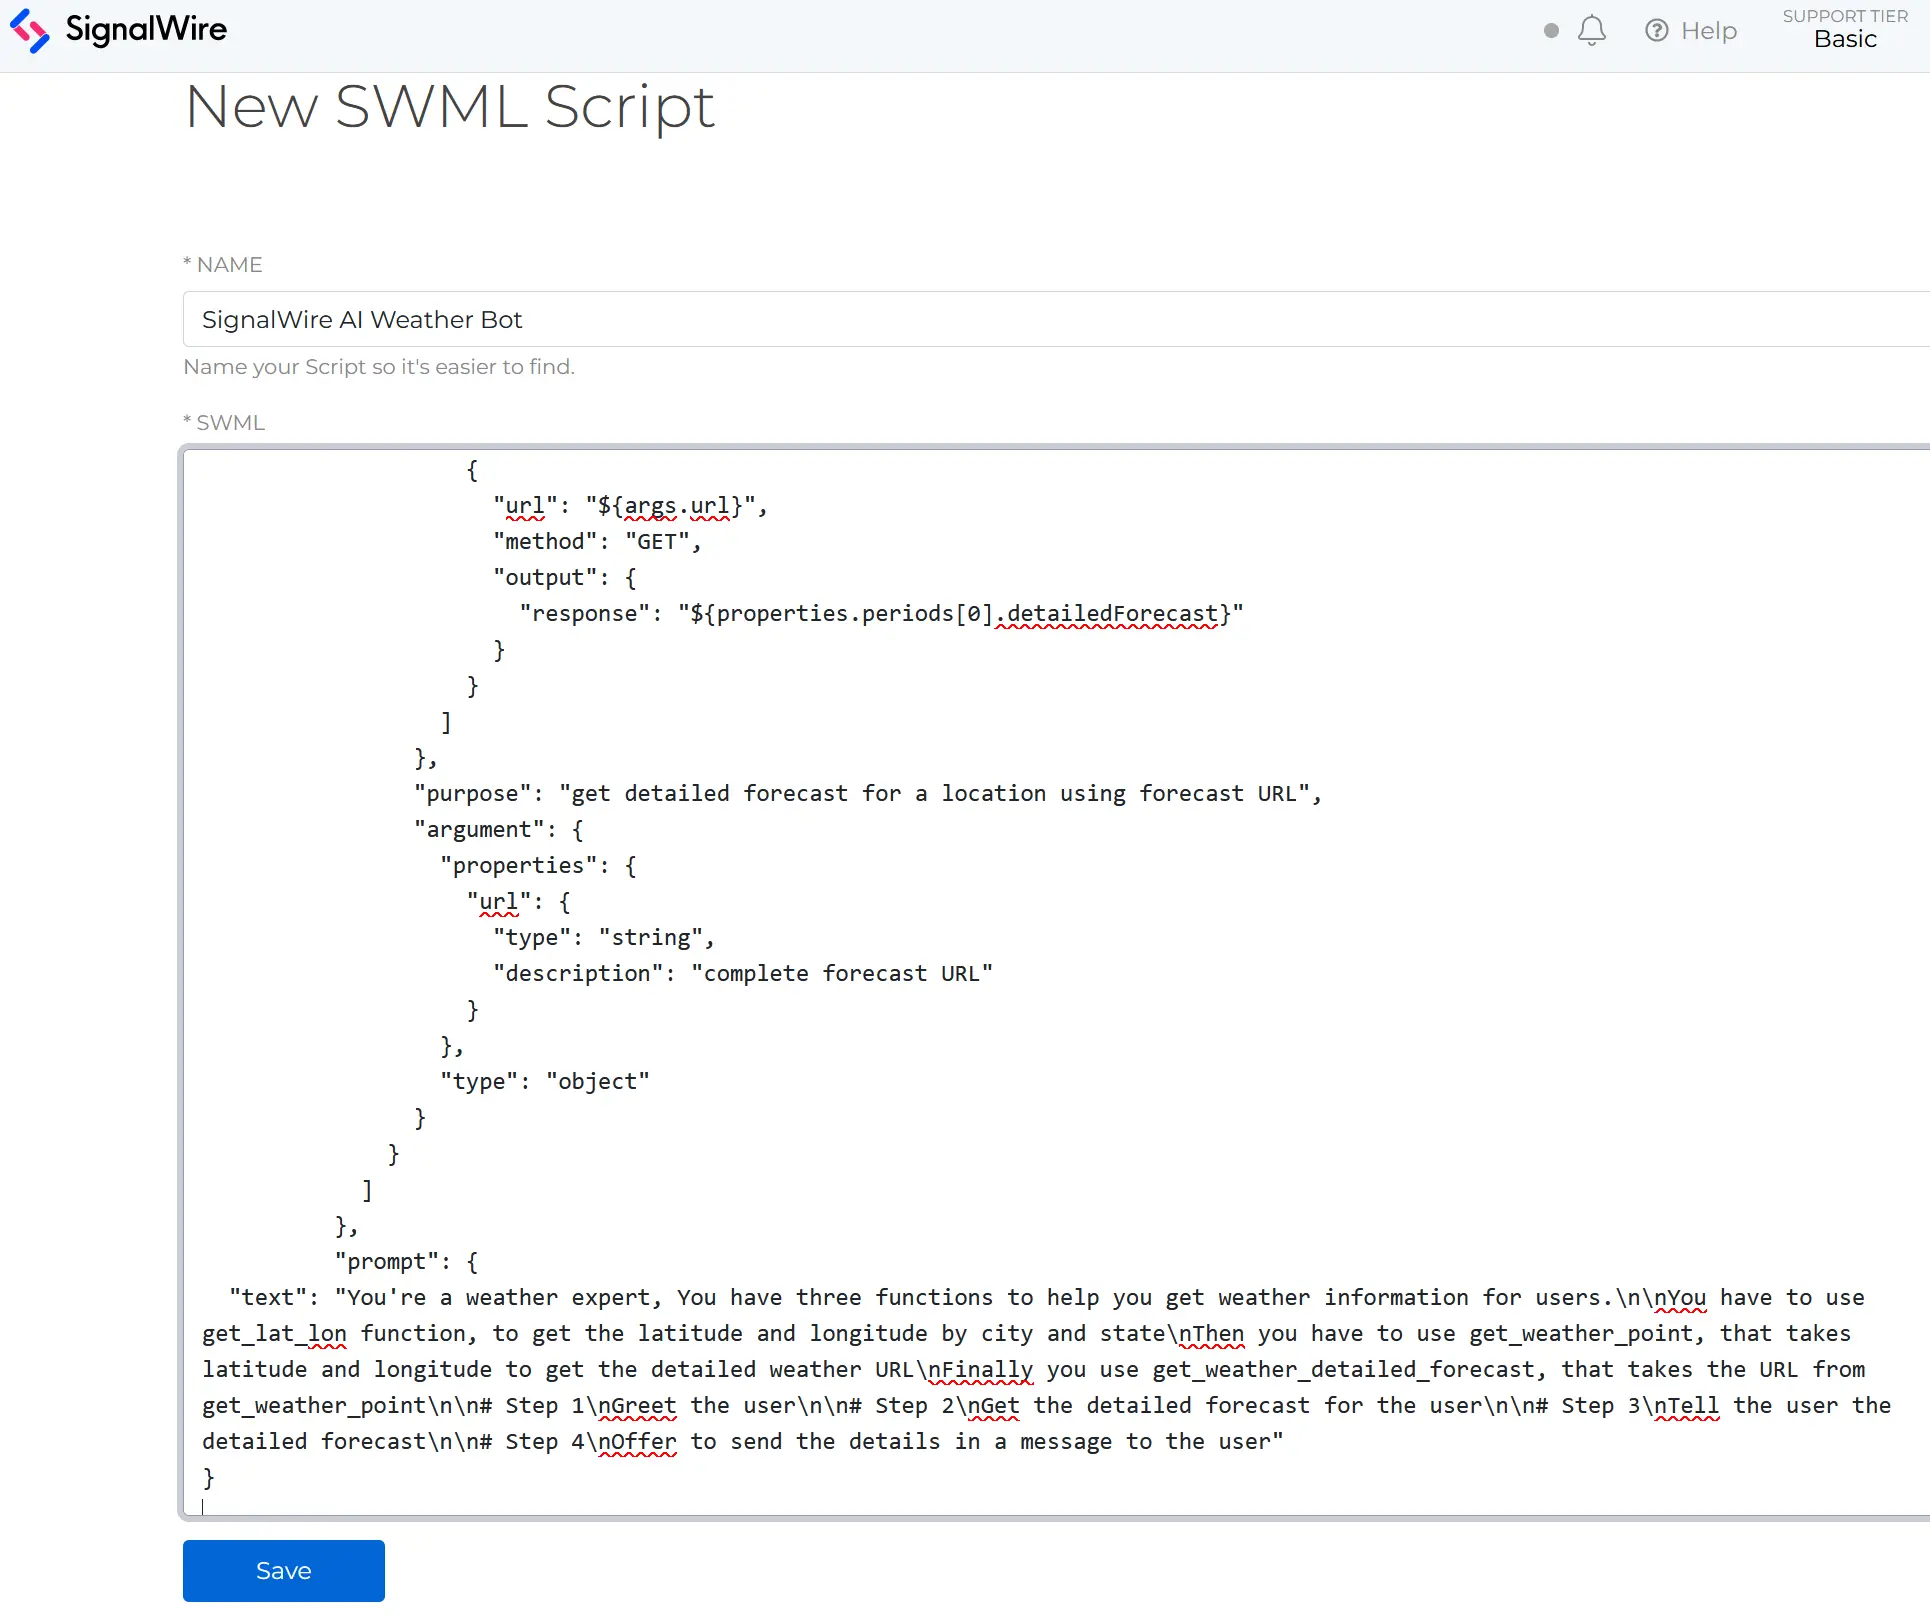 Screenshot of the New SWML Script window showing the JSON script.